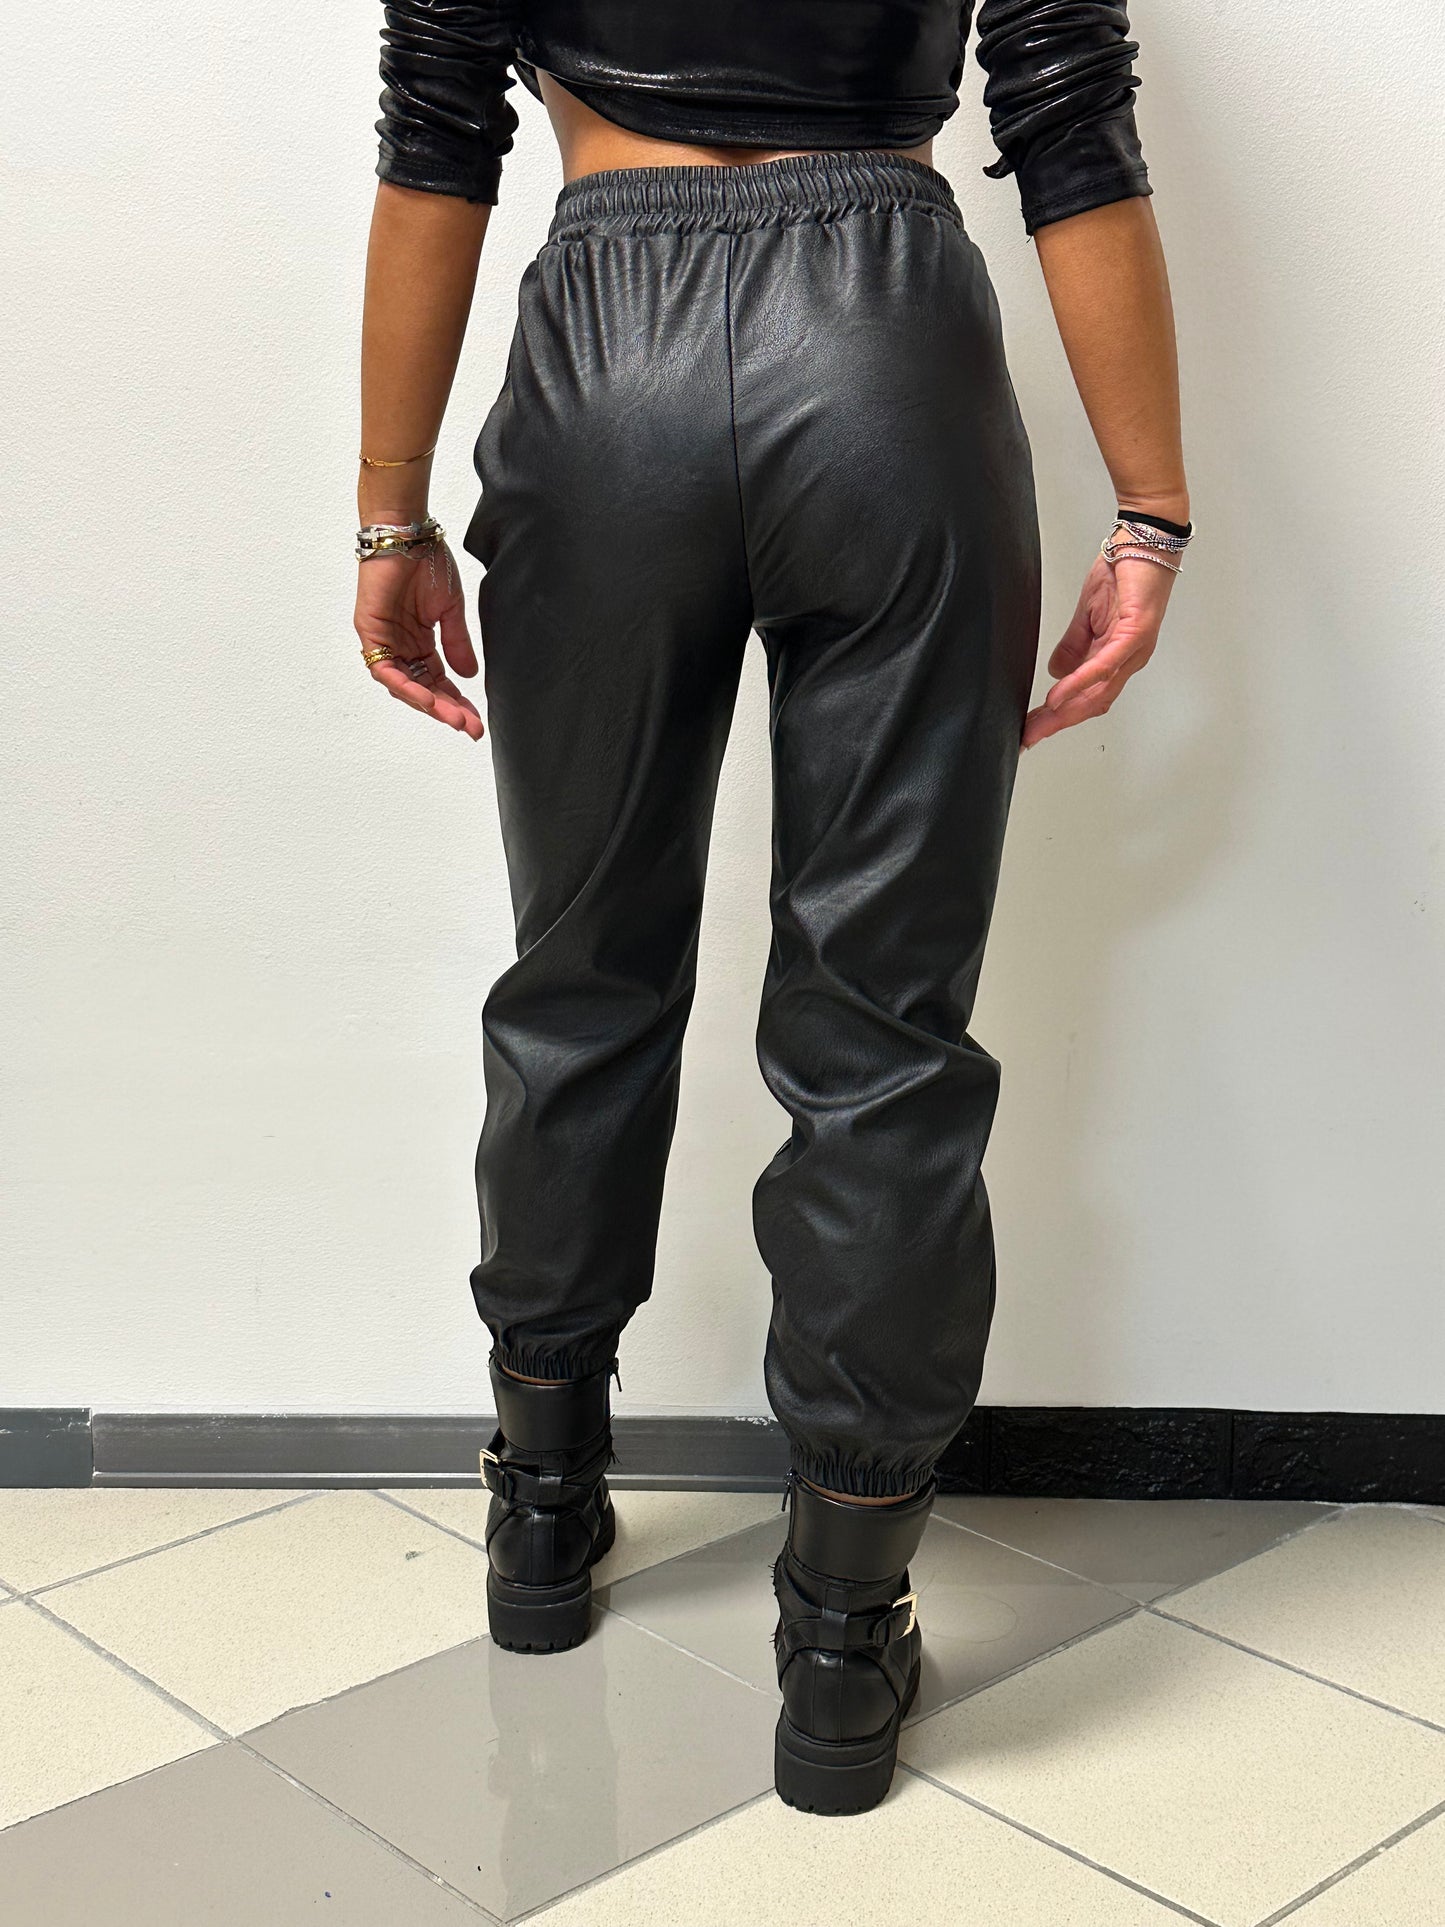 Pantalone nero ecopelle elastico caviglie